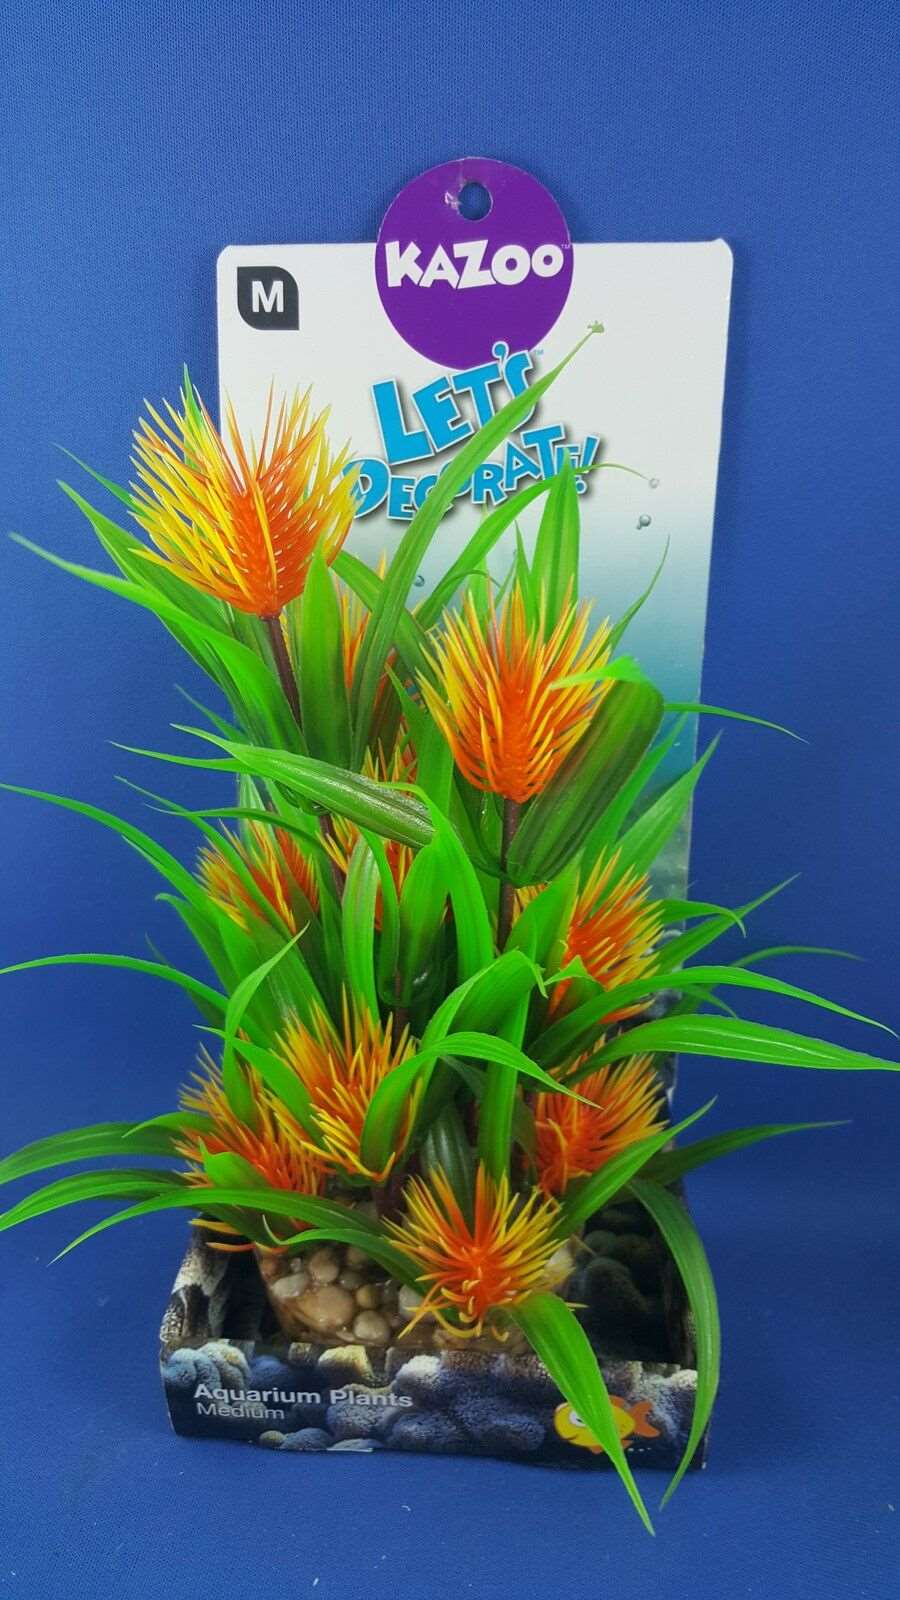 Kazoo aquarium plant, medium size, green &amp; orange leaves with solid pebble base